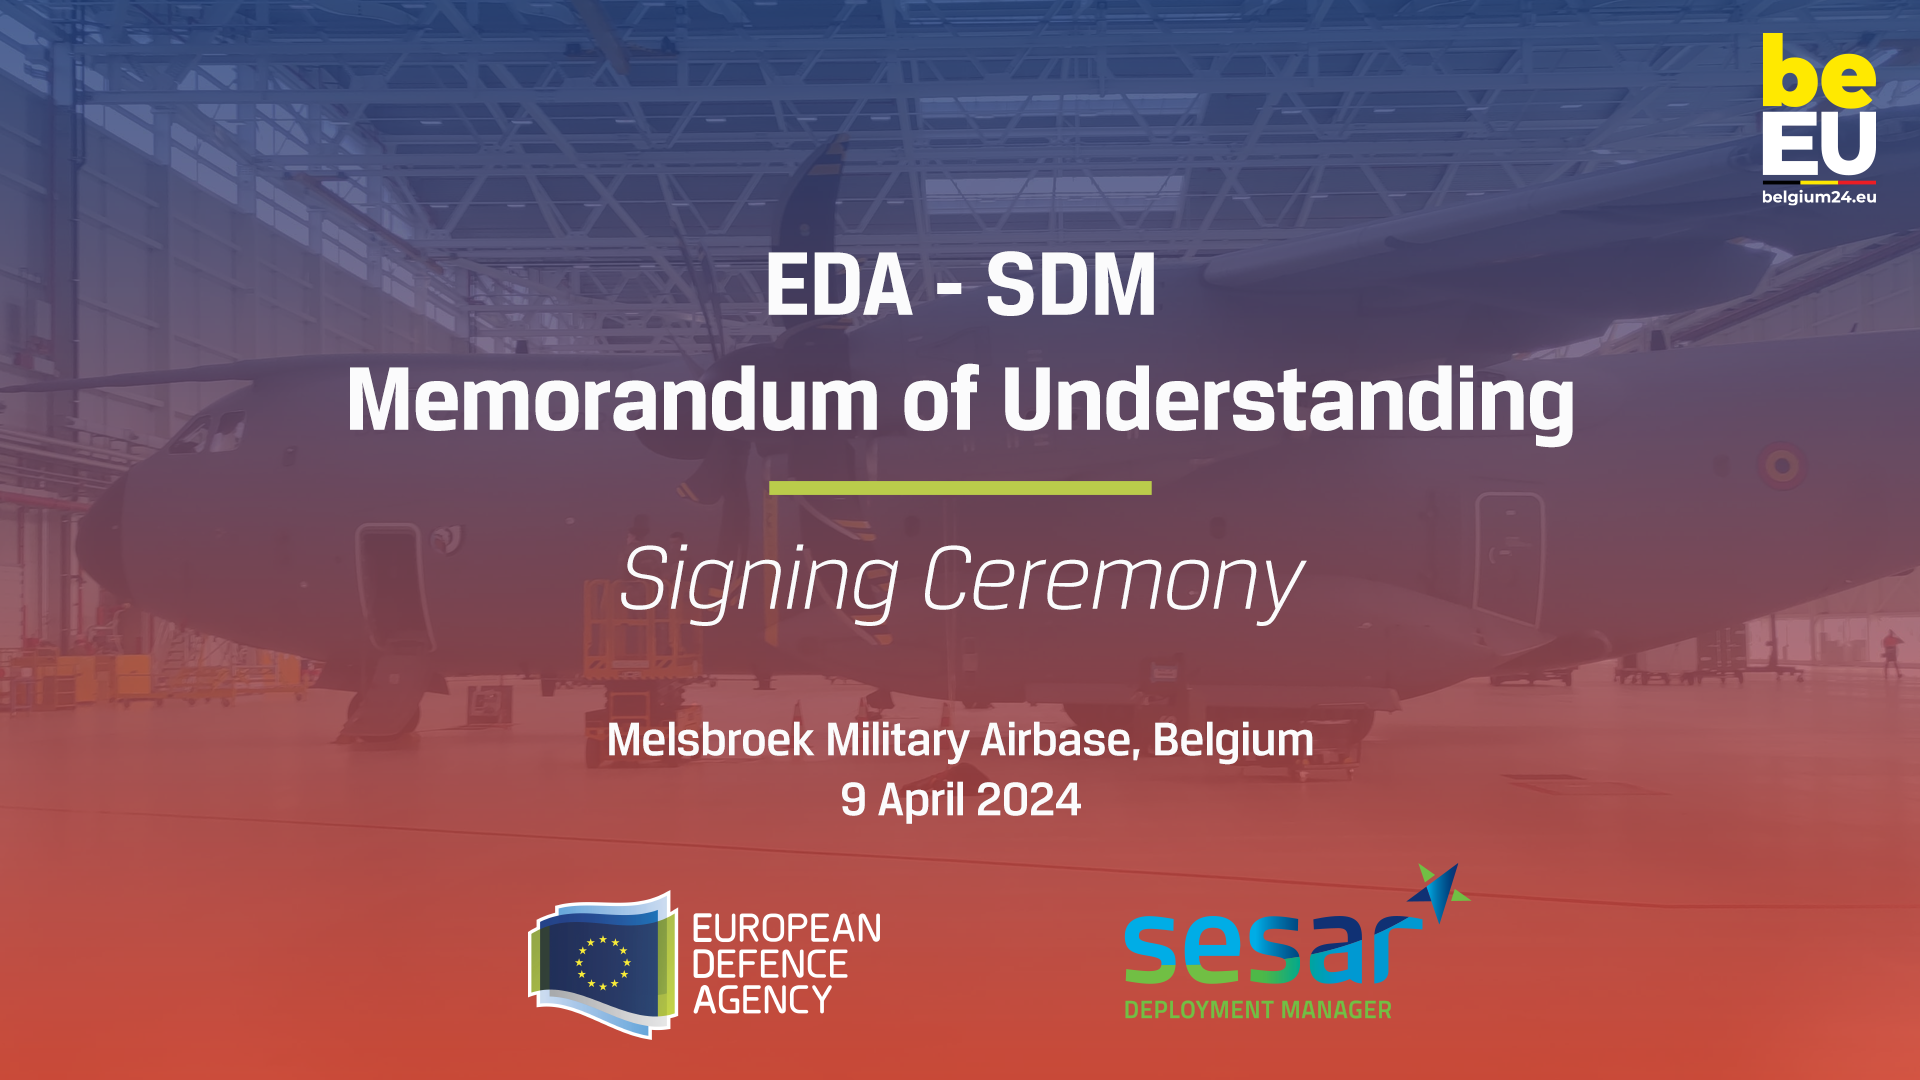 EDA and SESAR Deployment Manager renew strategic partnership 